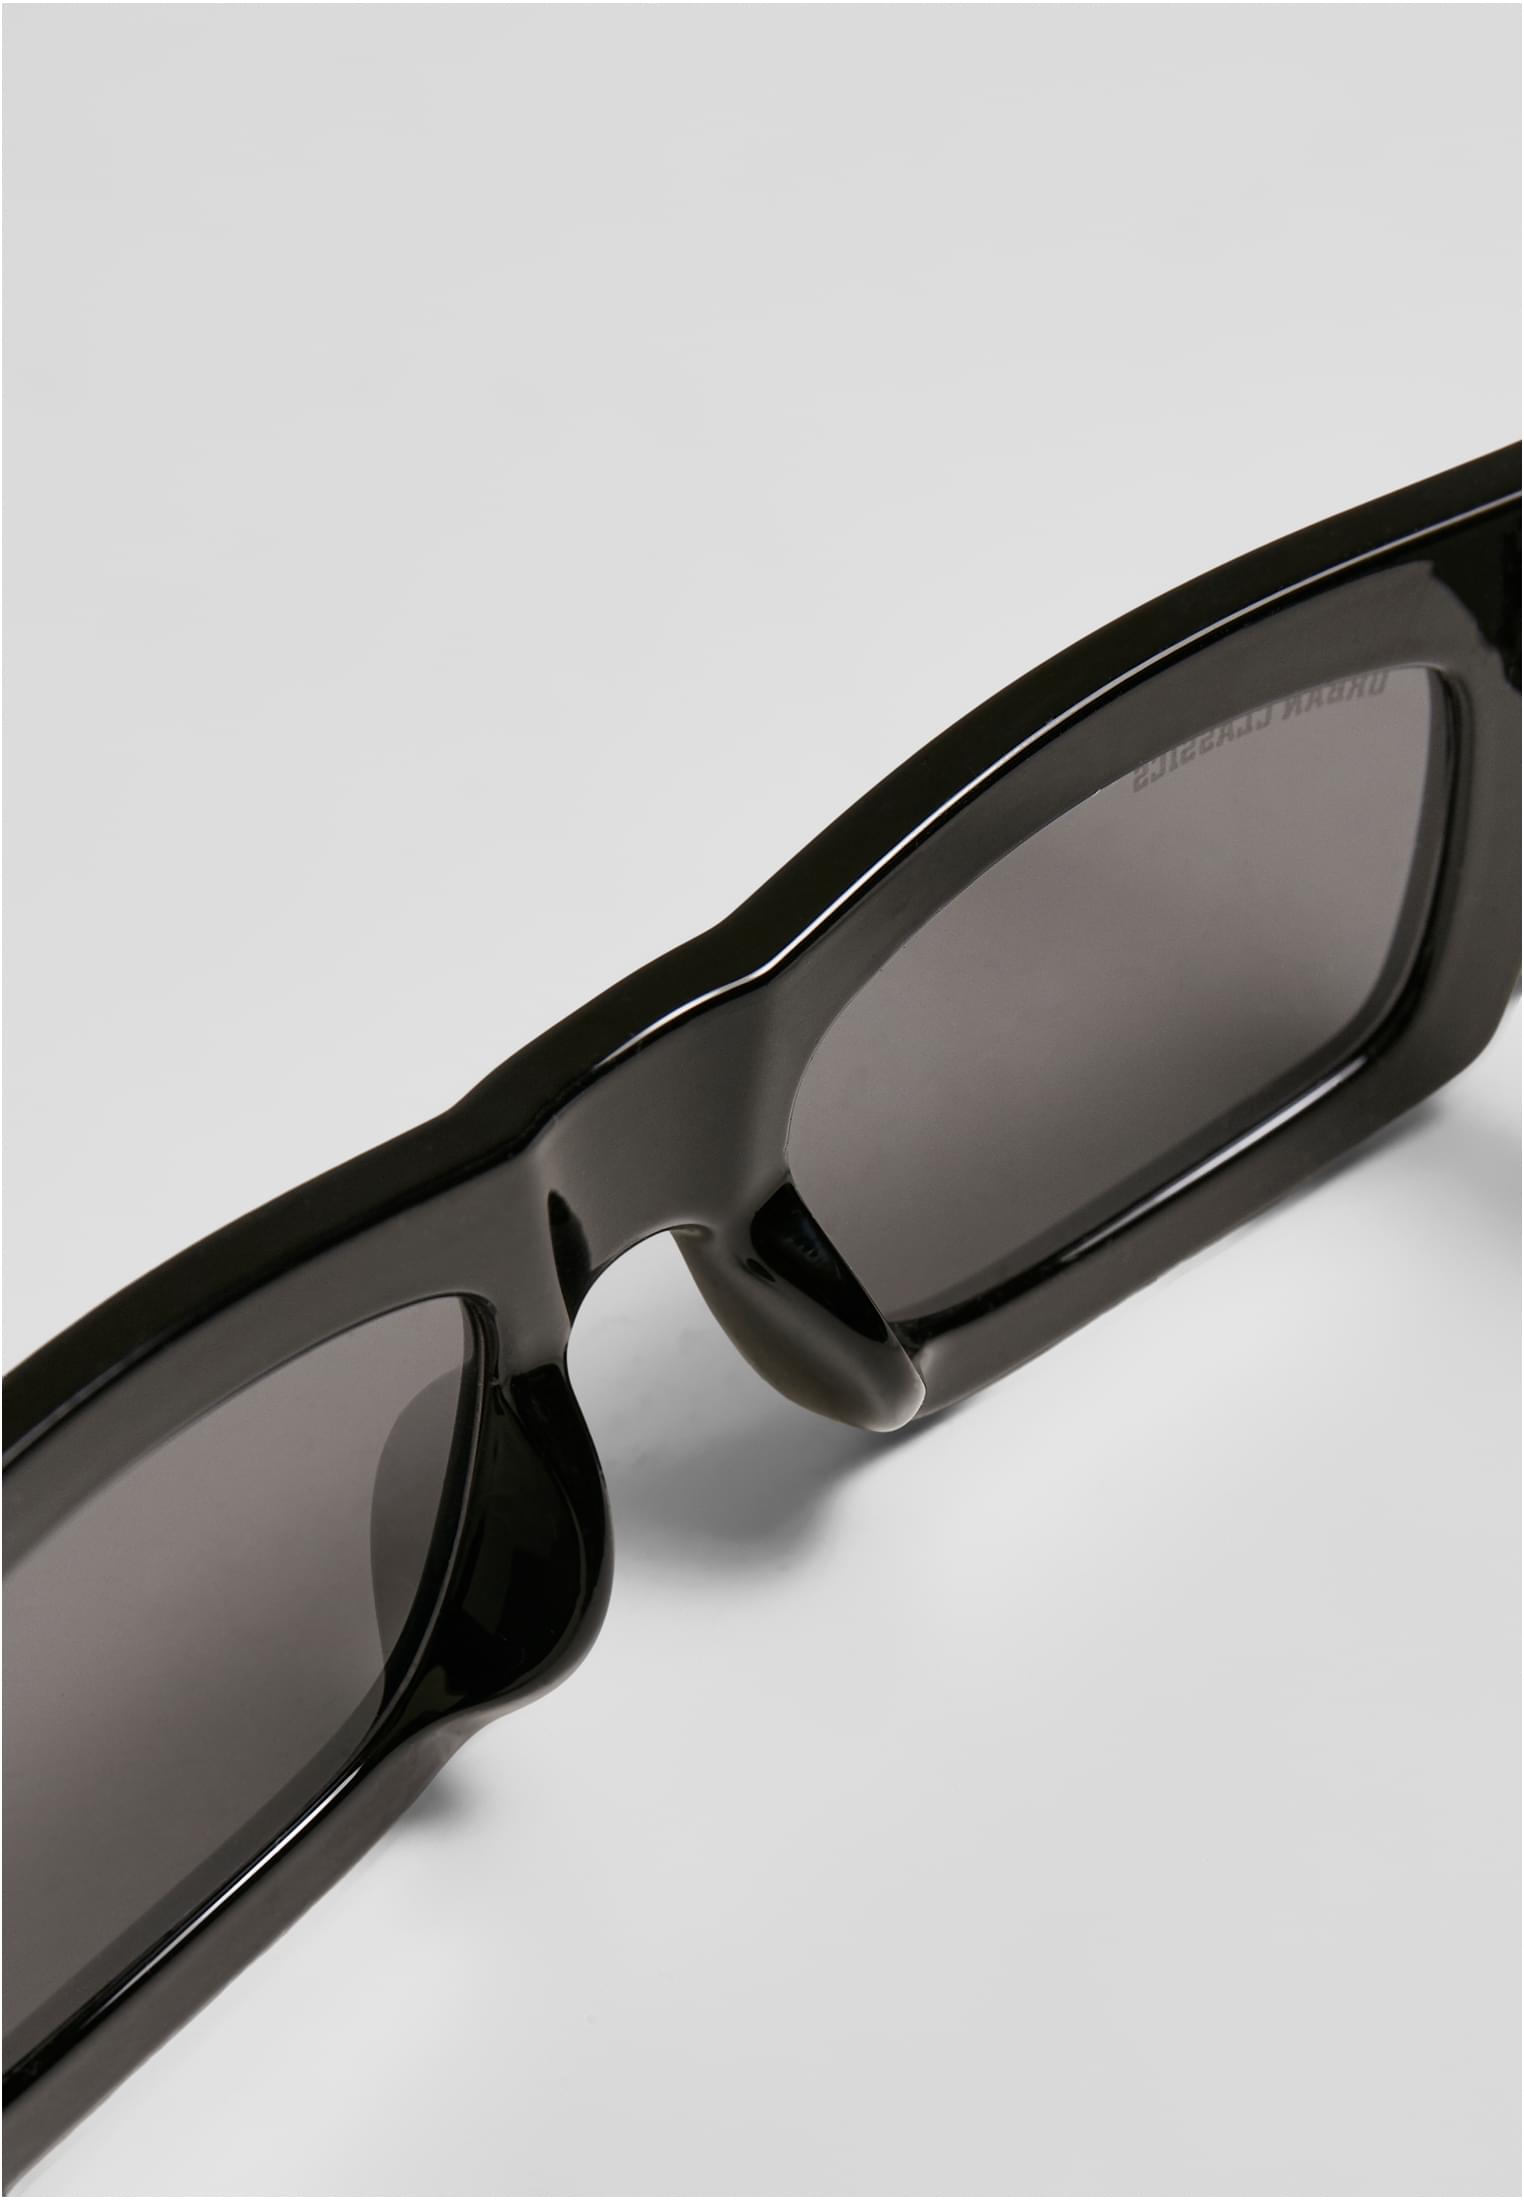 Sonnenbrillen Sunglasses Sanremo 3-Pack in Farbe black/red/amber